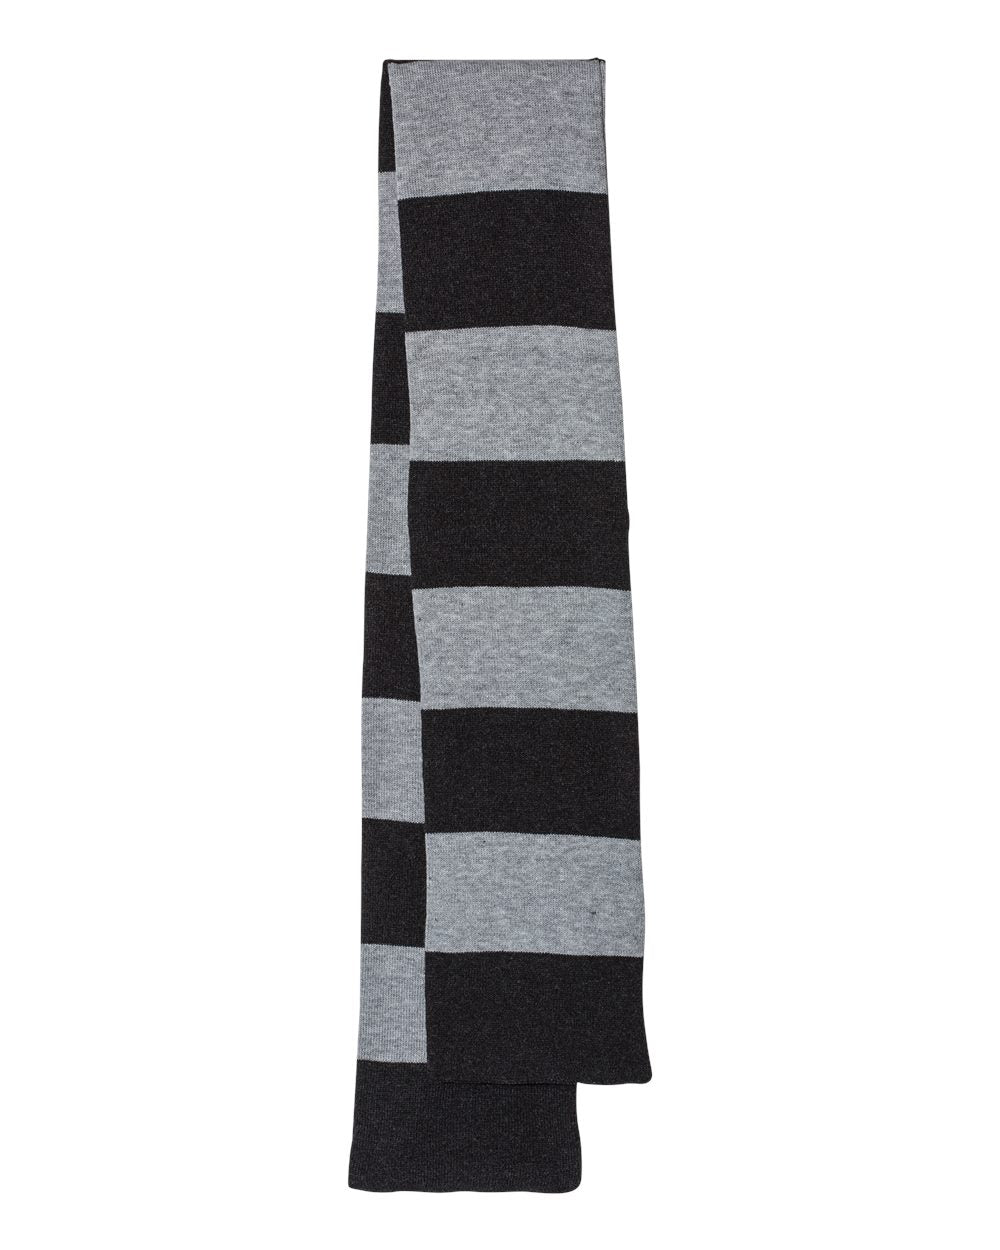 Sportsman Rugby-Striped Knit Scarf SP02 #color_Heather Black/ Heather Grey